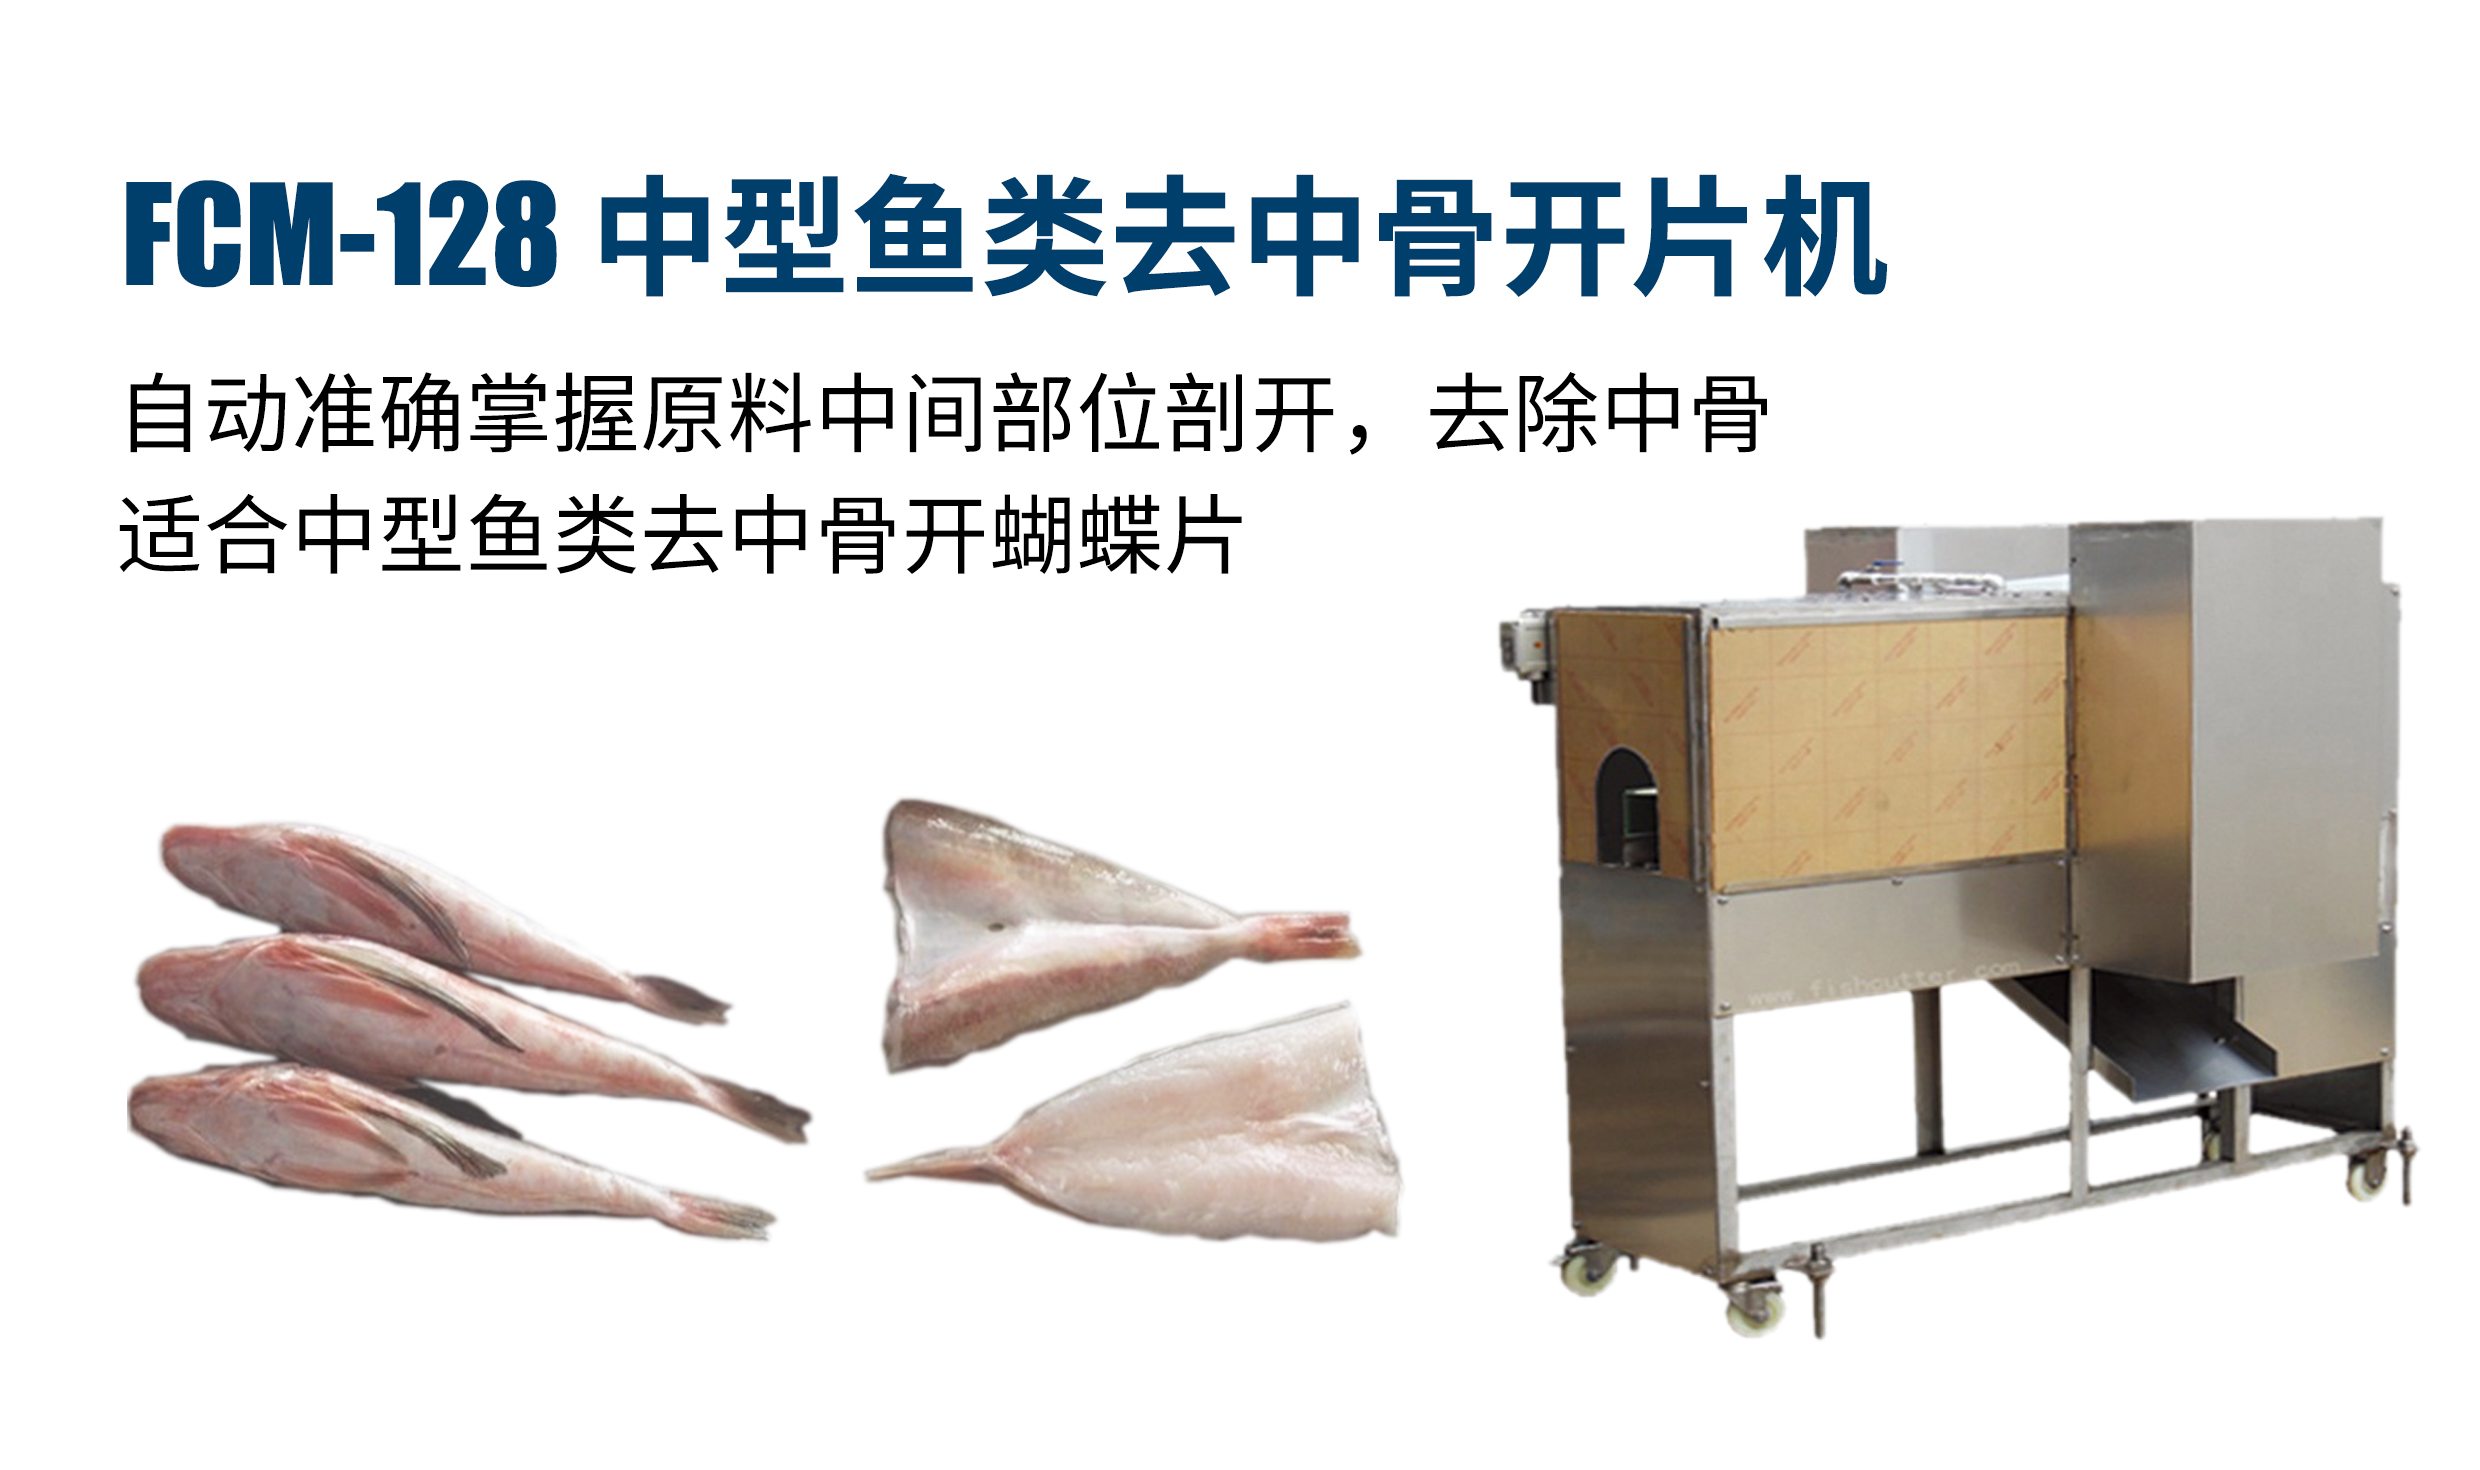 Medium sized fish bone removal and splicing machine (large)